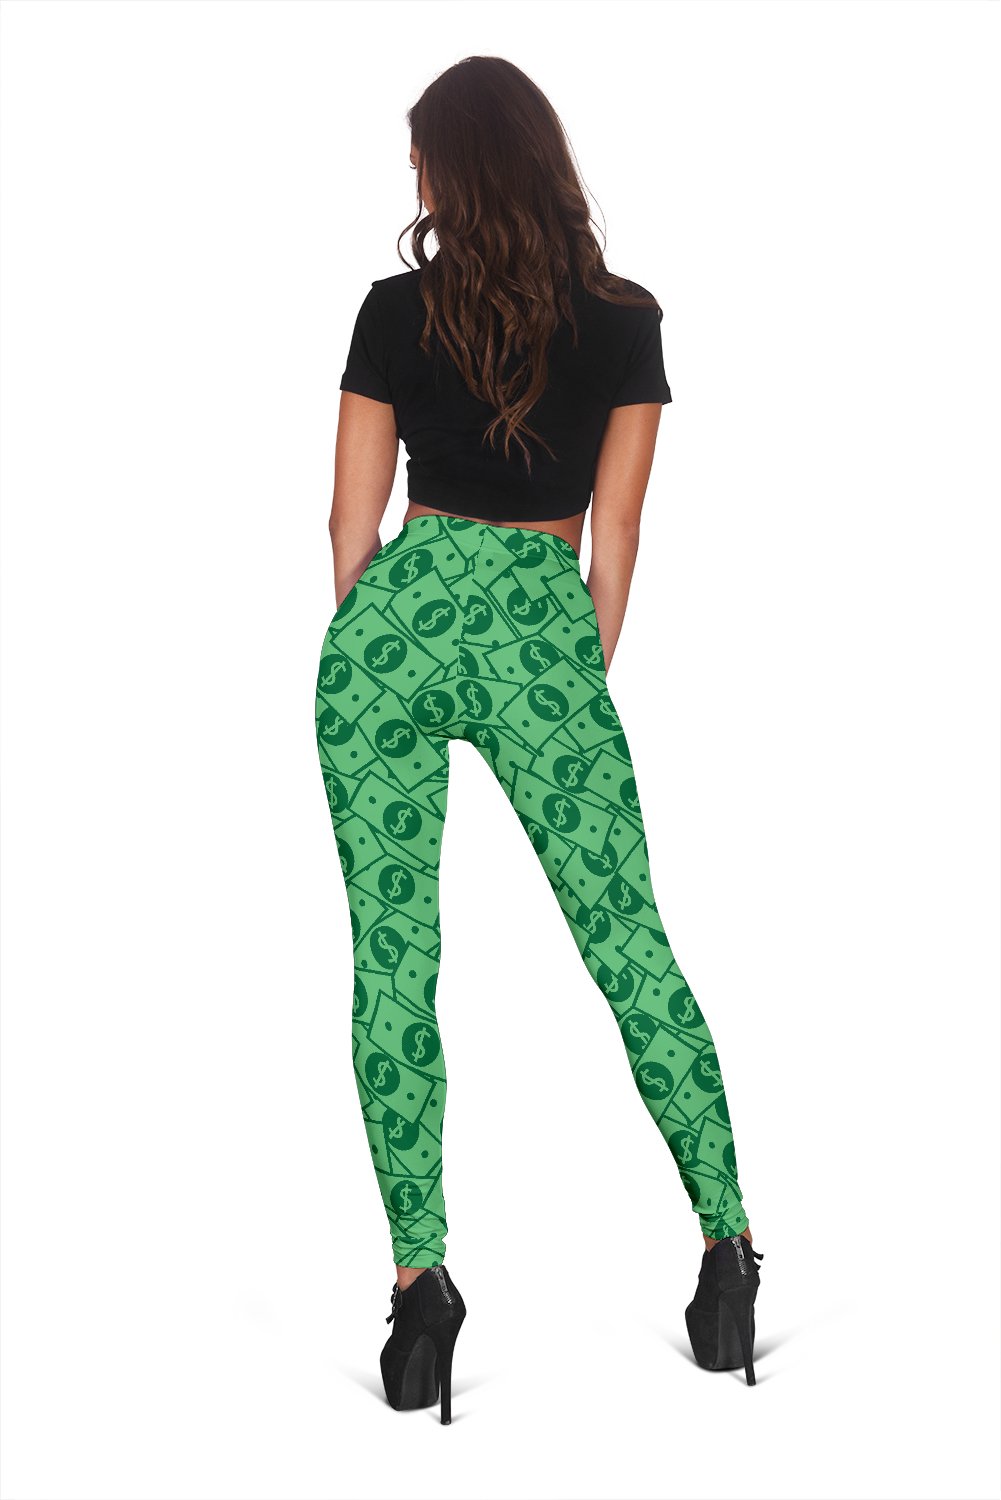 Money Dollar Print Pattern Women Leggings-grizzshop